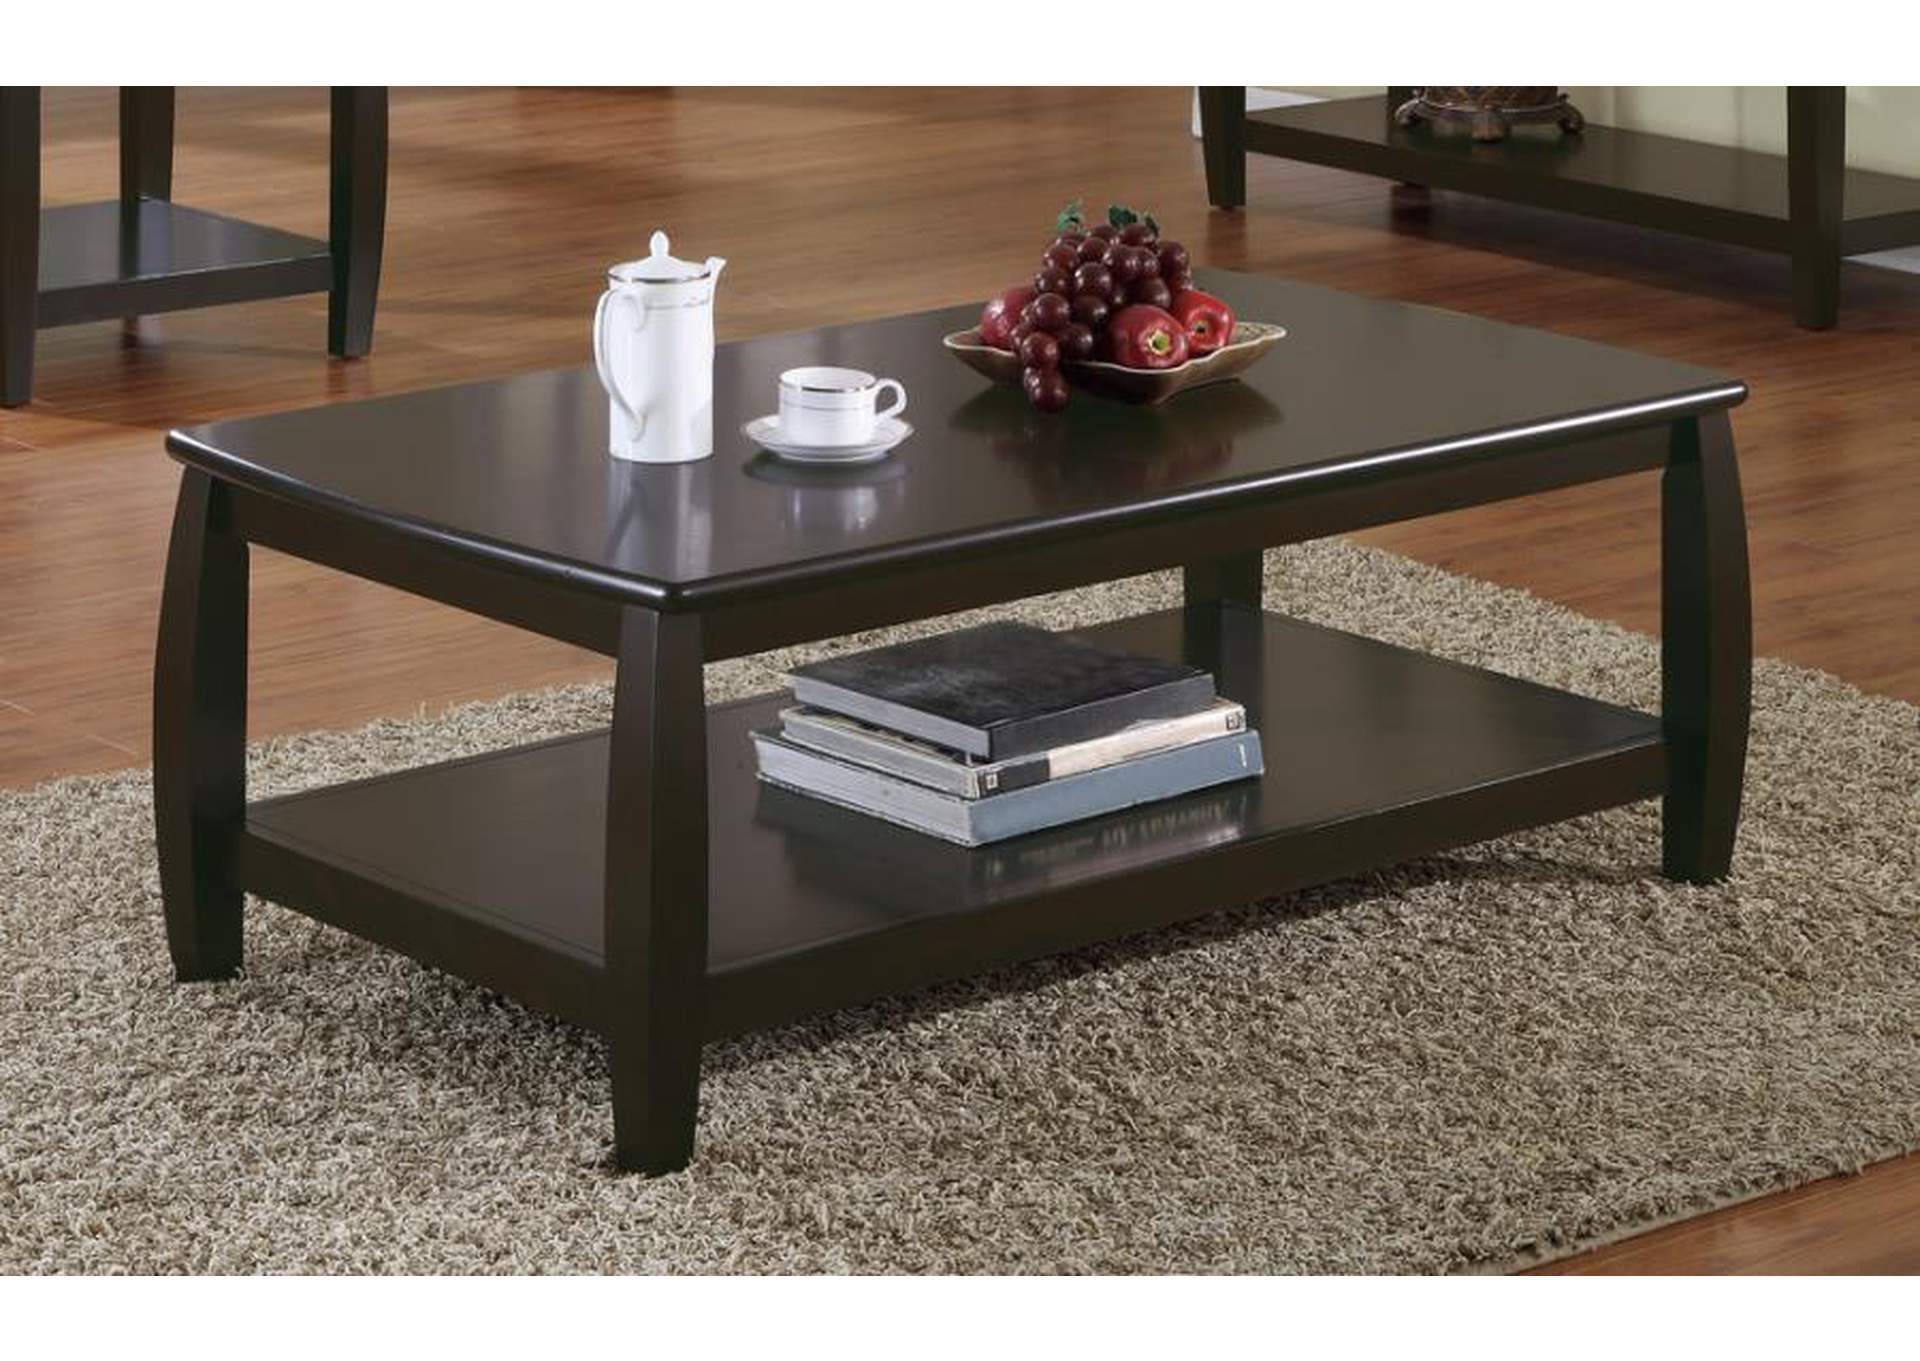 Rectangular Coffee Table with Lower Shelf Espresso,Coaster Furniture